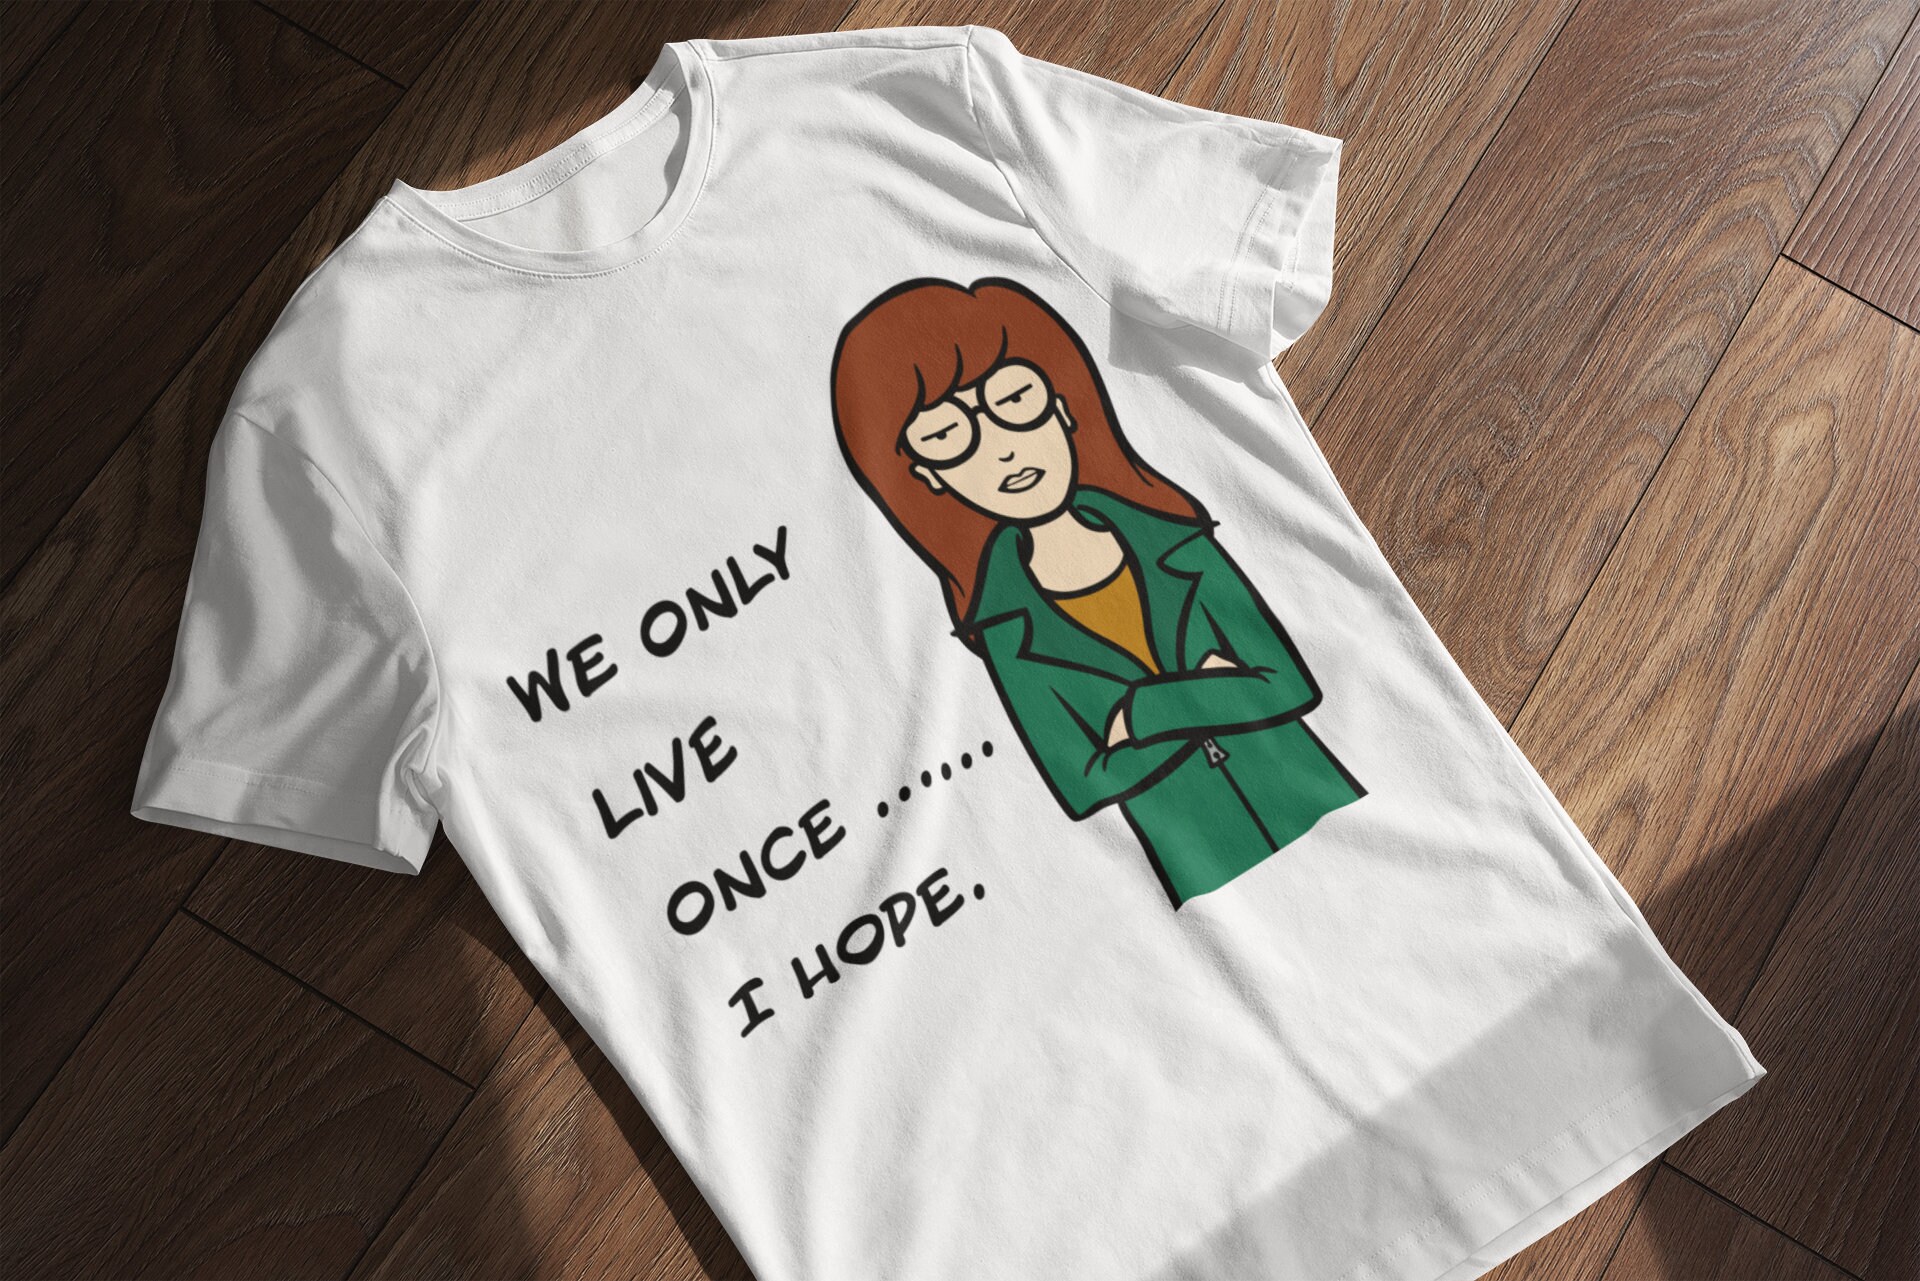 Daria Sarcasm Mtv 90s Show Sick And Sad World Parody Antisocial Phrases Unisex T-Shirt